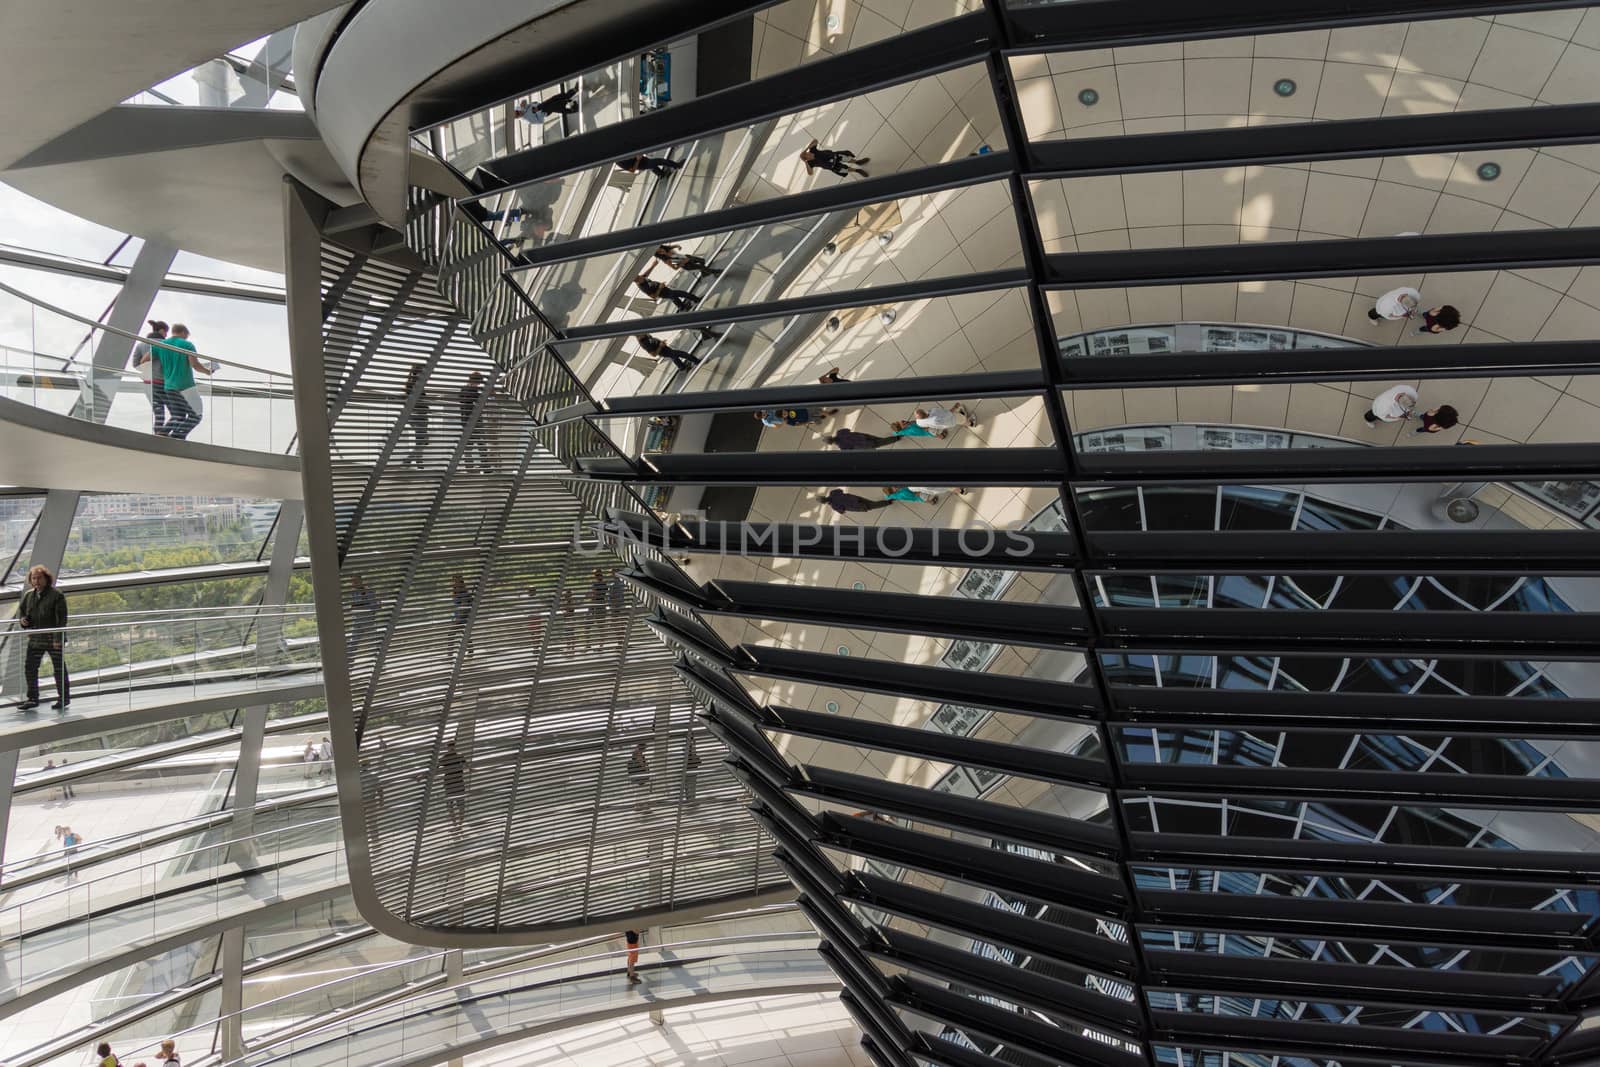 The Reichstag in Berlin by bjoernd